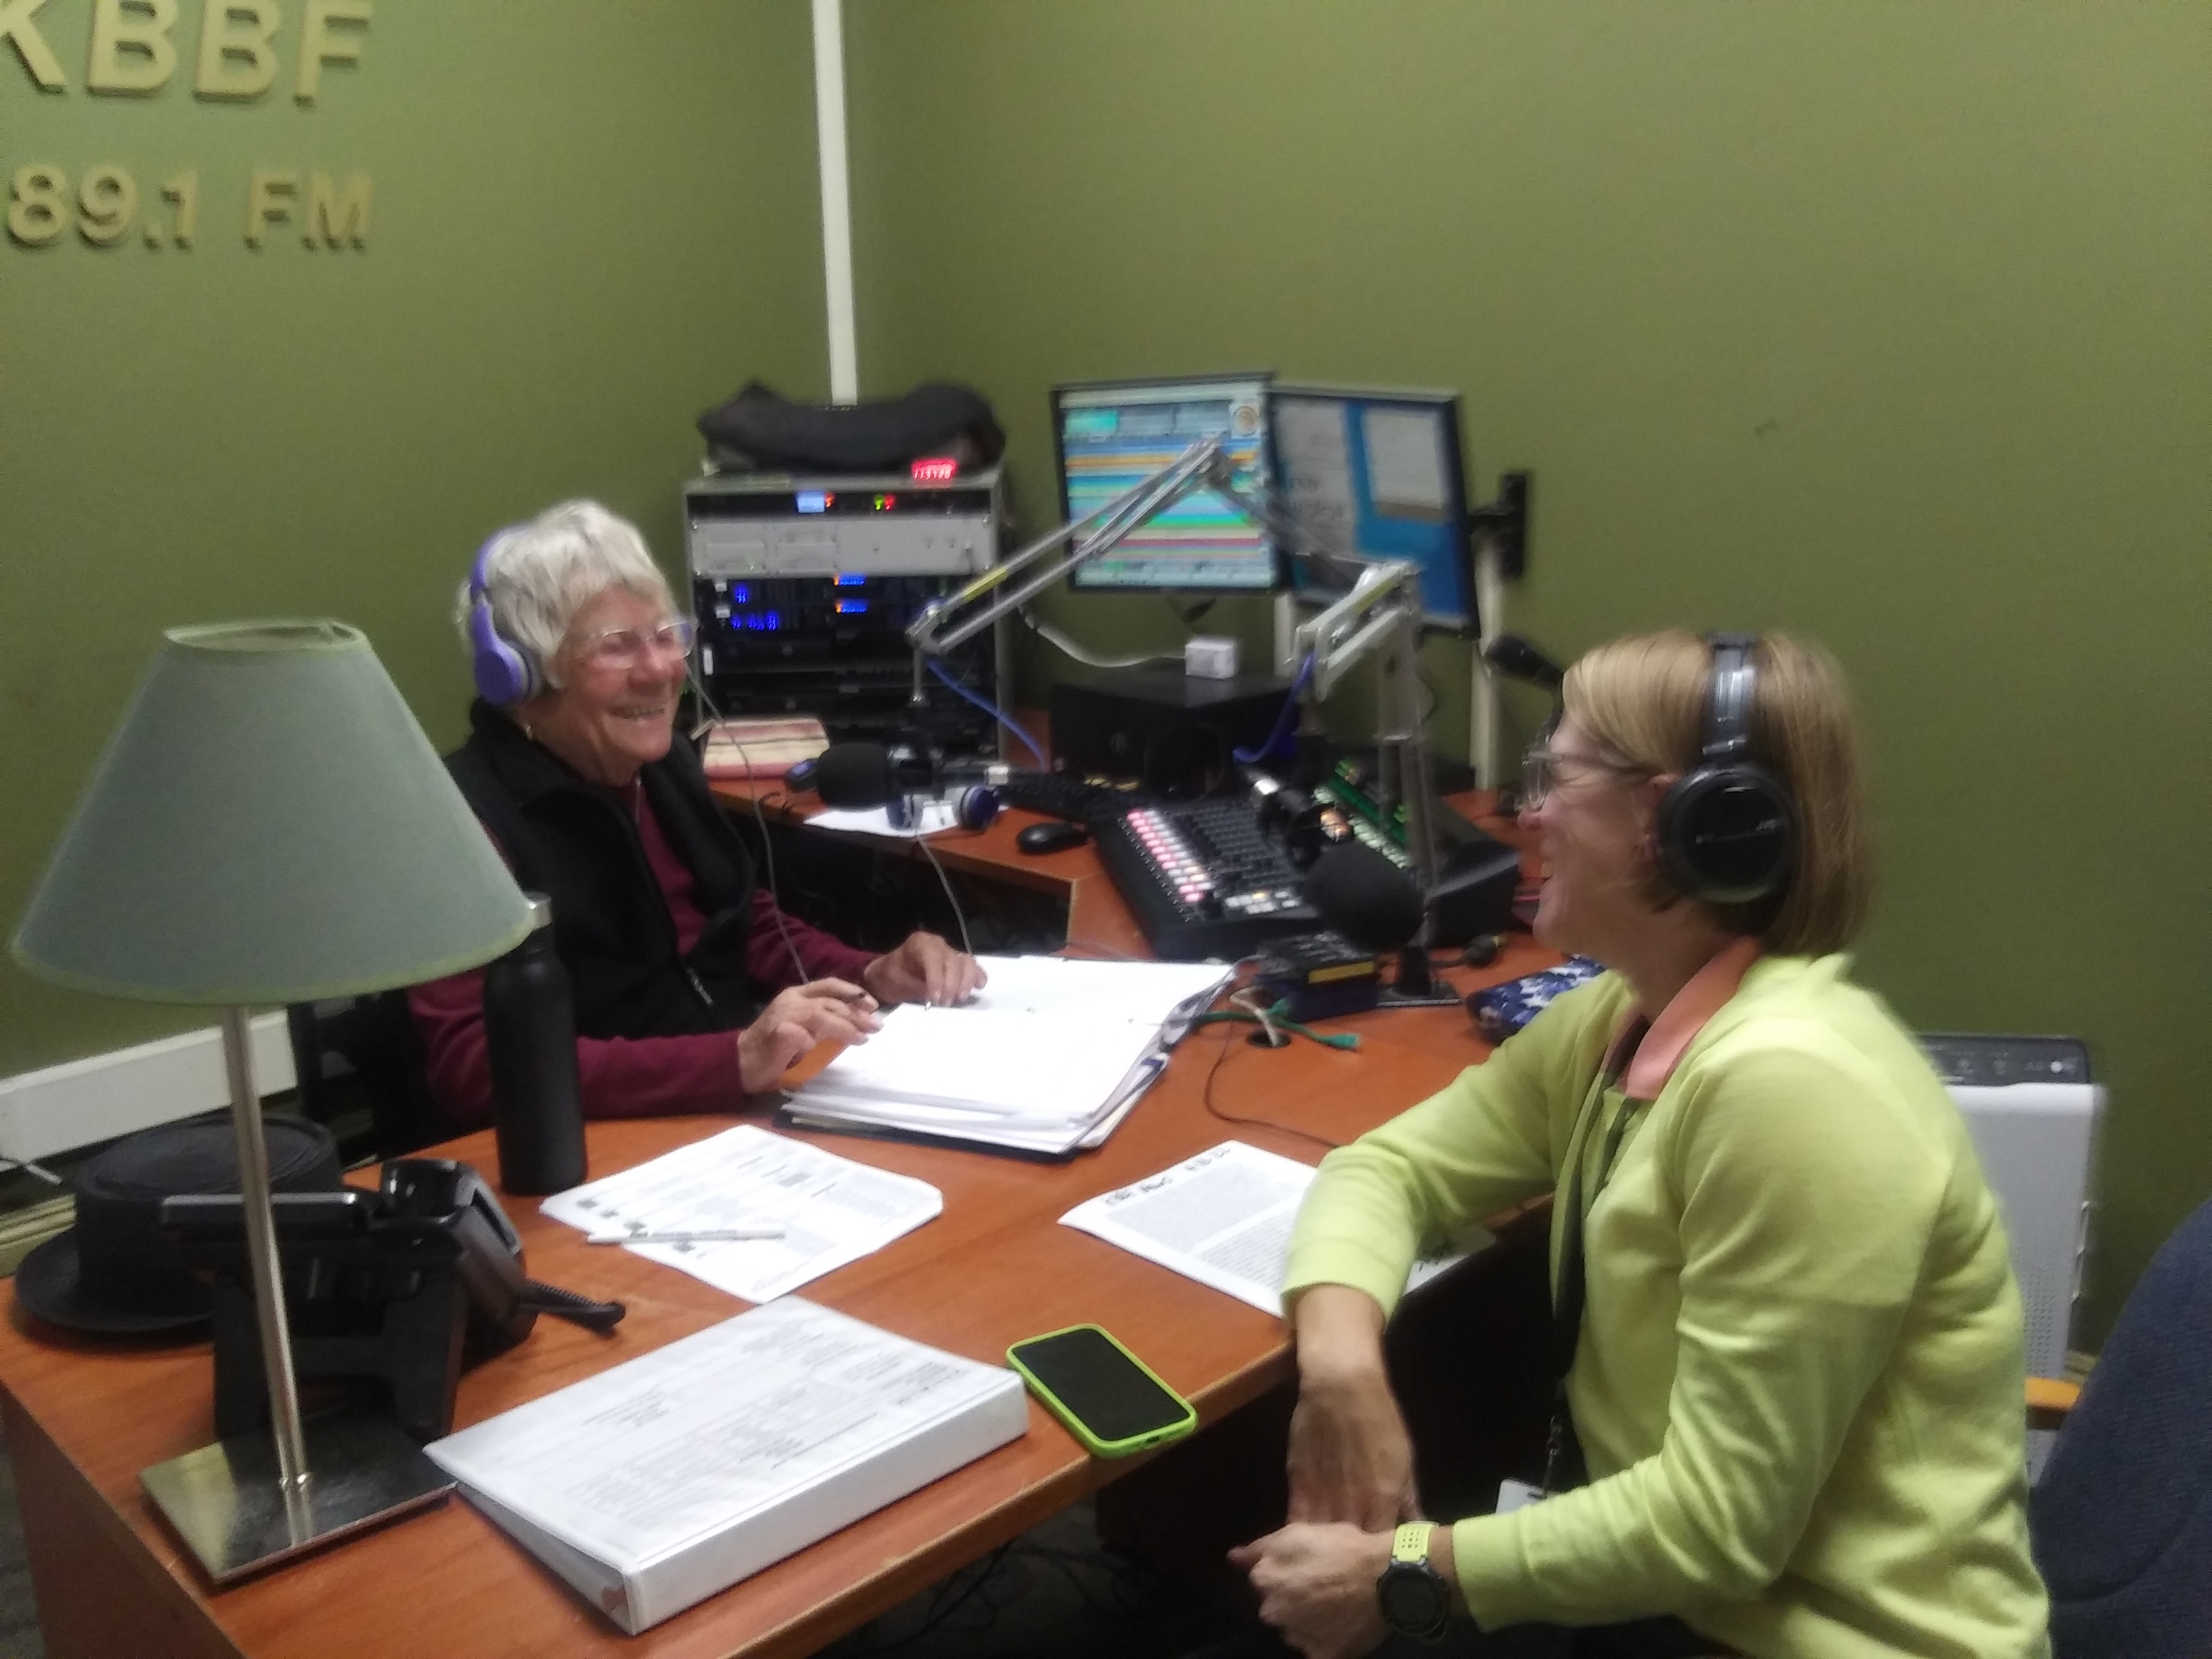 Kerry Benefield and Elaine Holtz in Radio KBBF Studio